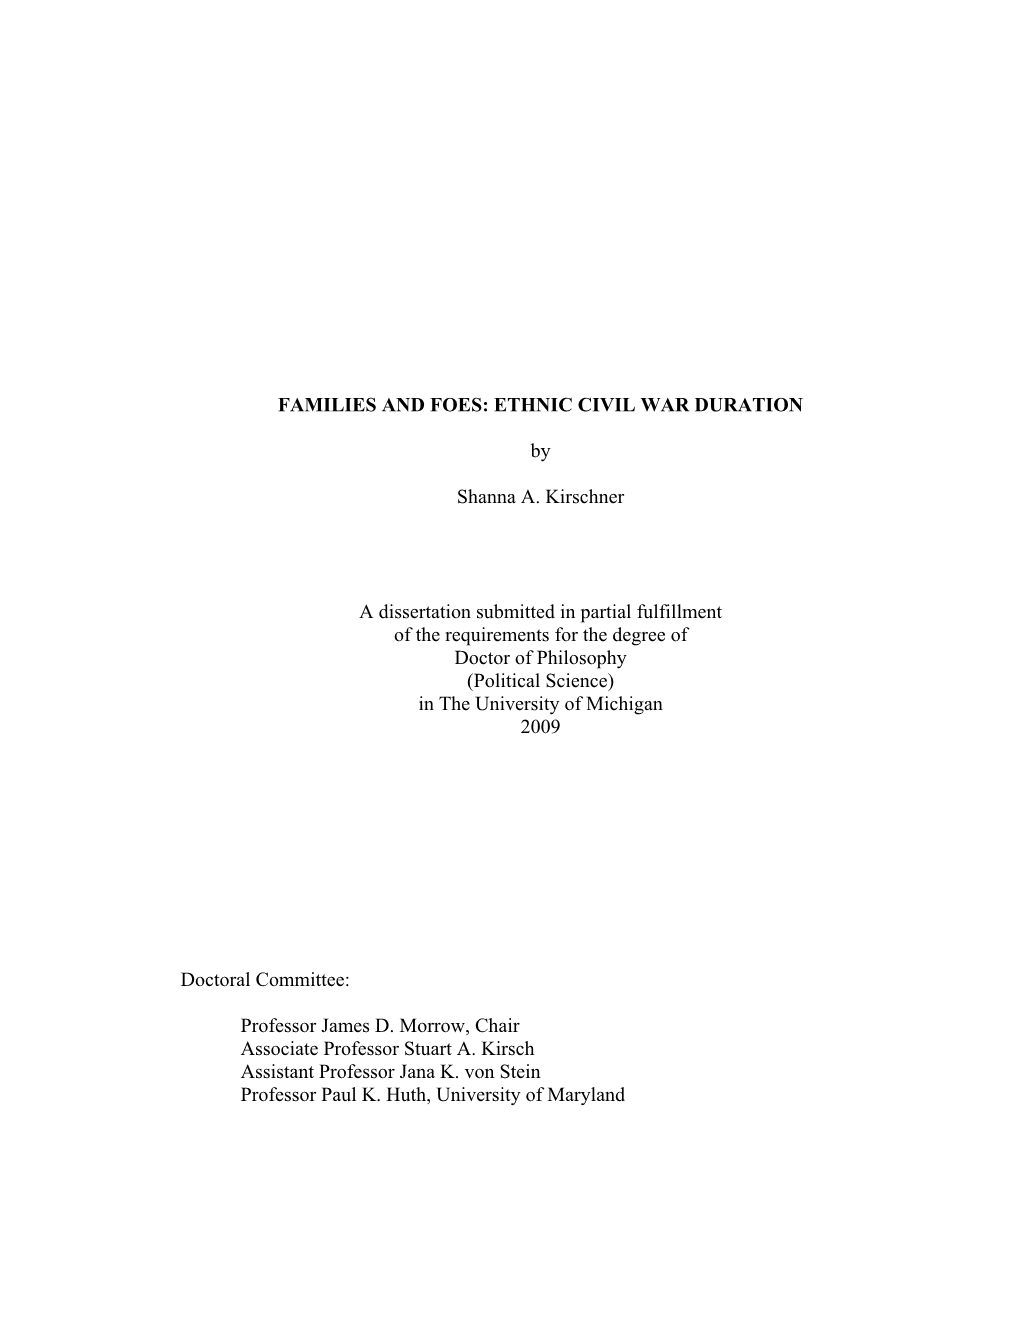 ETHNIC CIVIL WAR DURATION by Shanna A. Kirschner a Dissertation